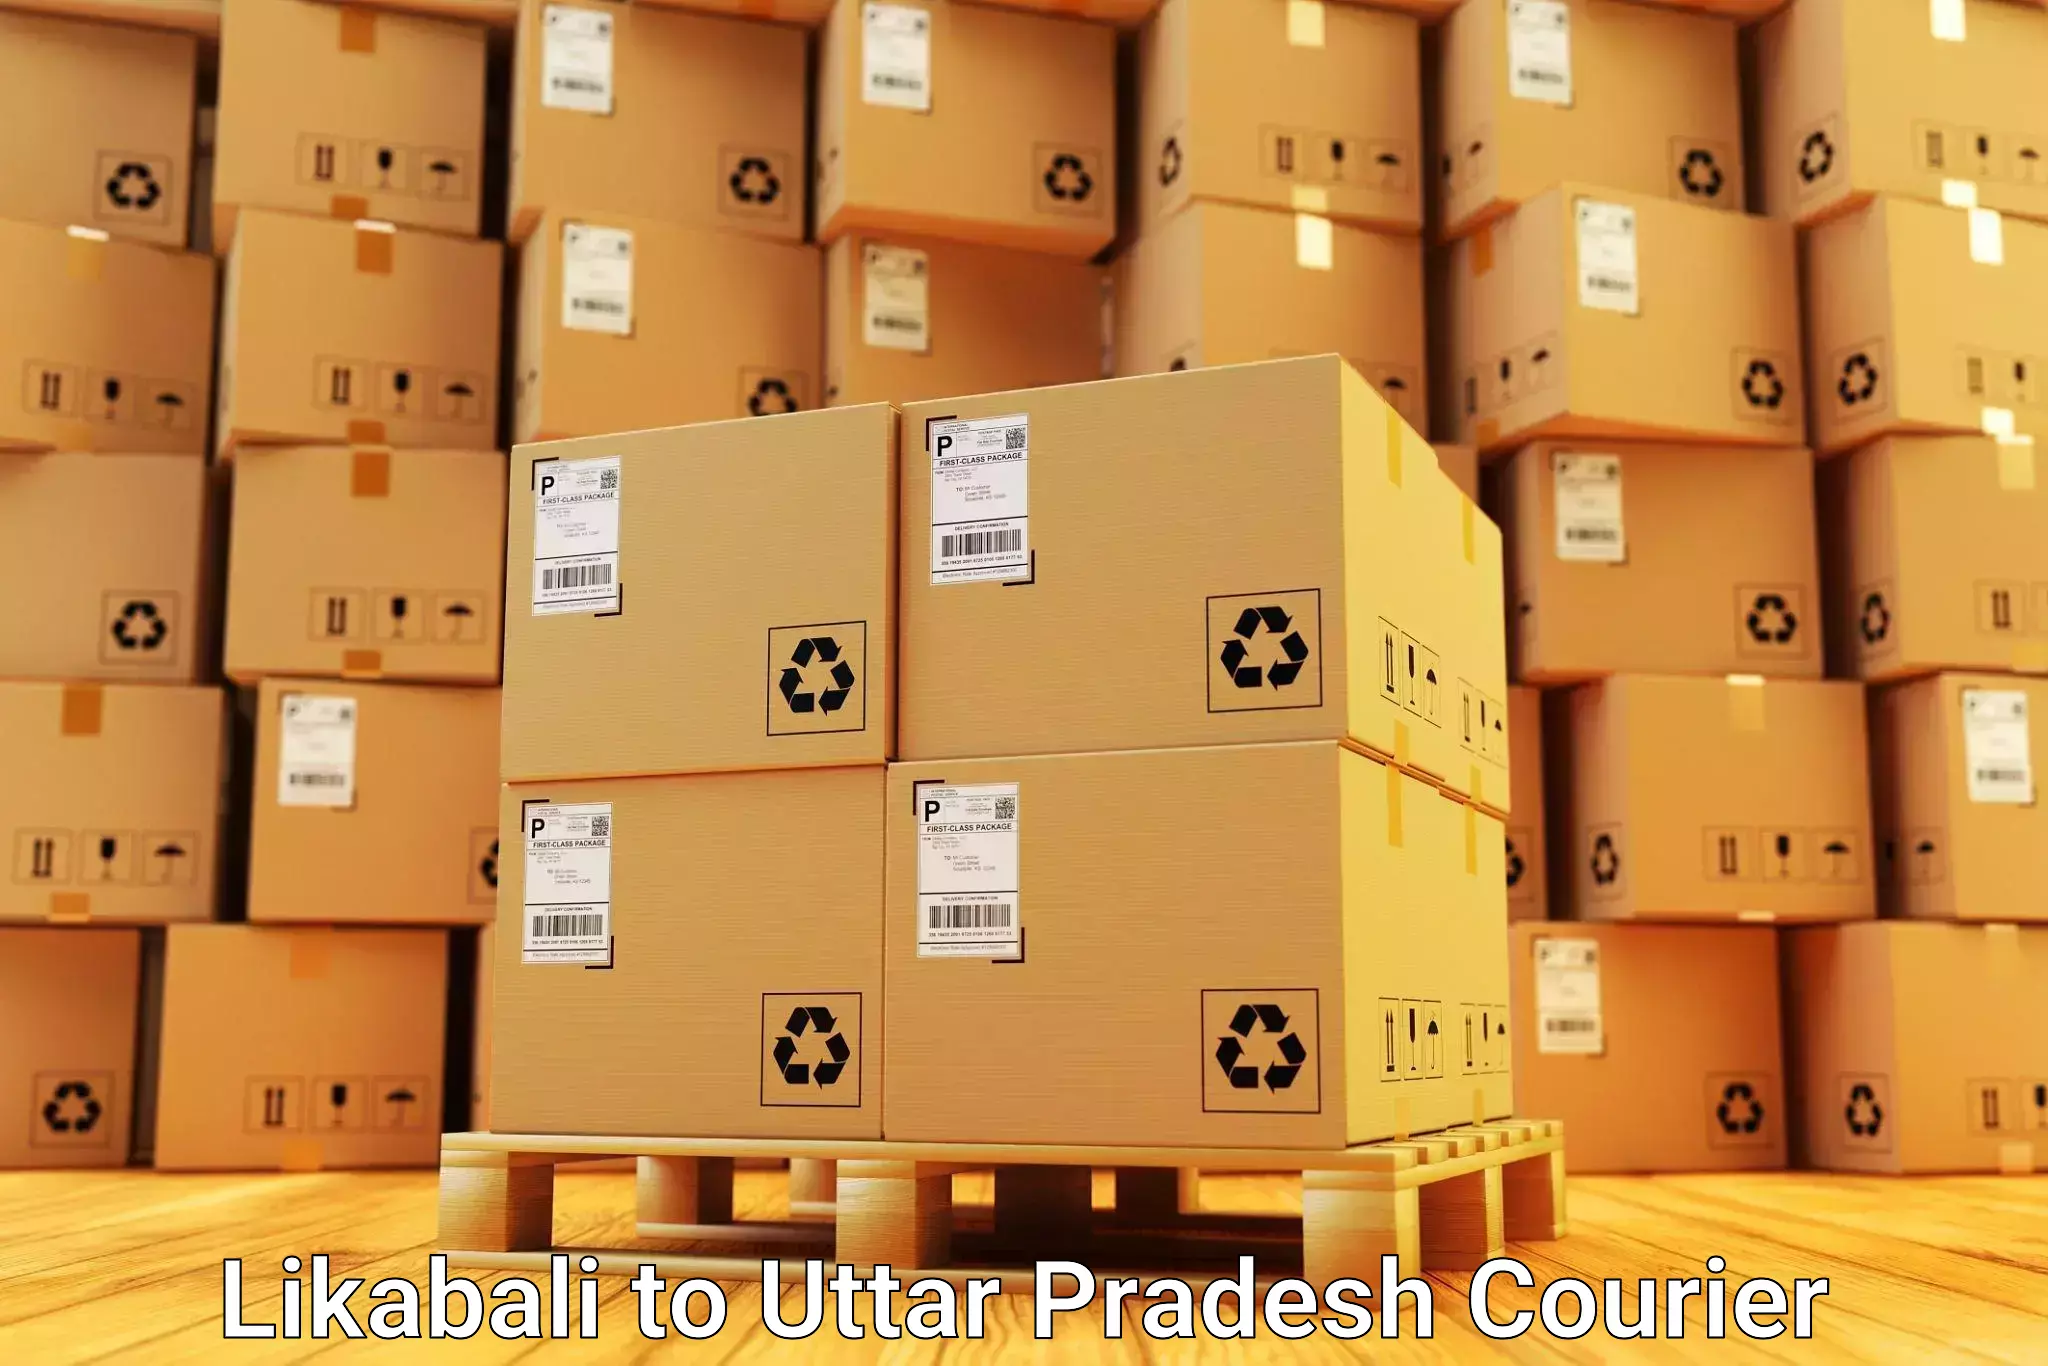 Budget-friendly movers Likabali to Uttar Pradesh